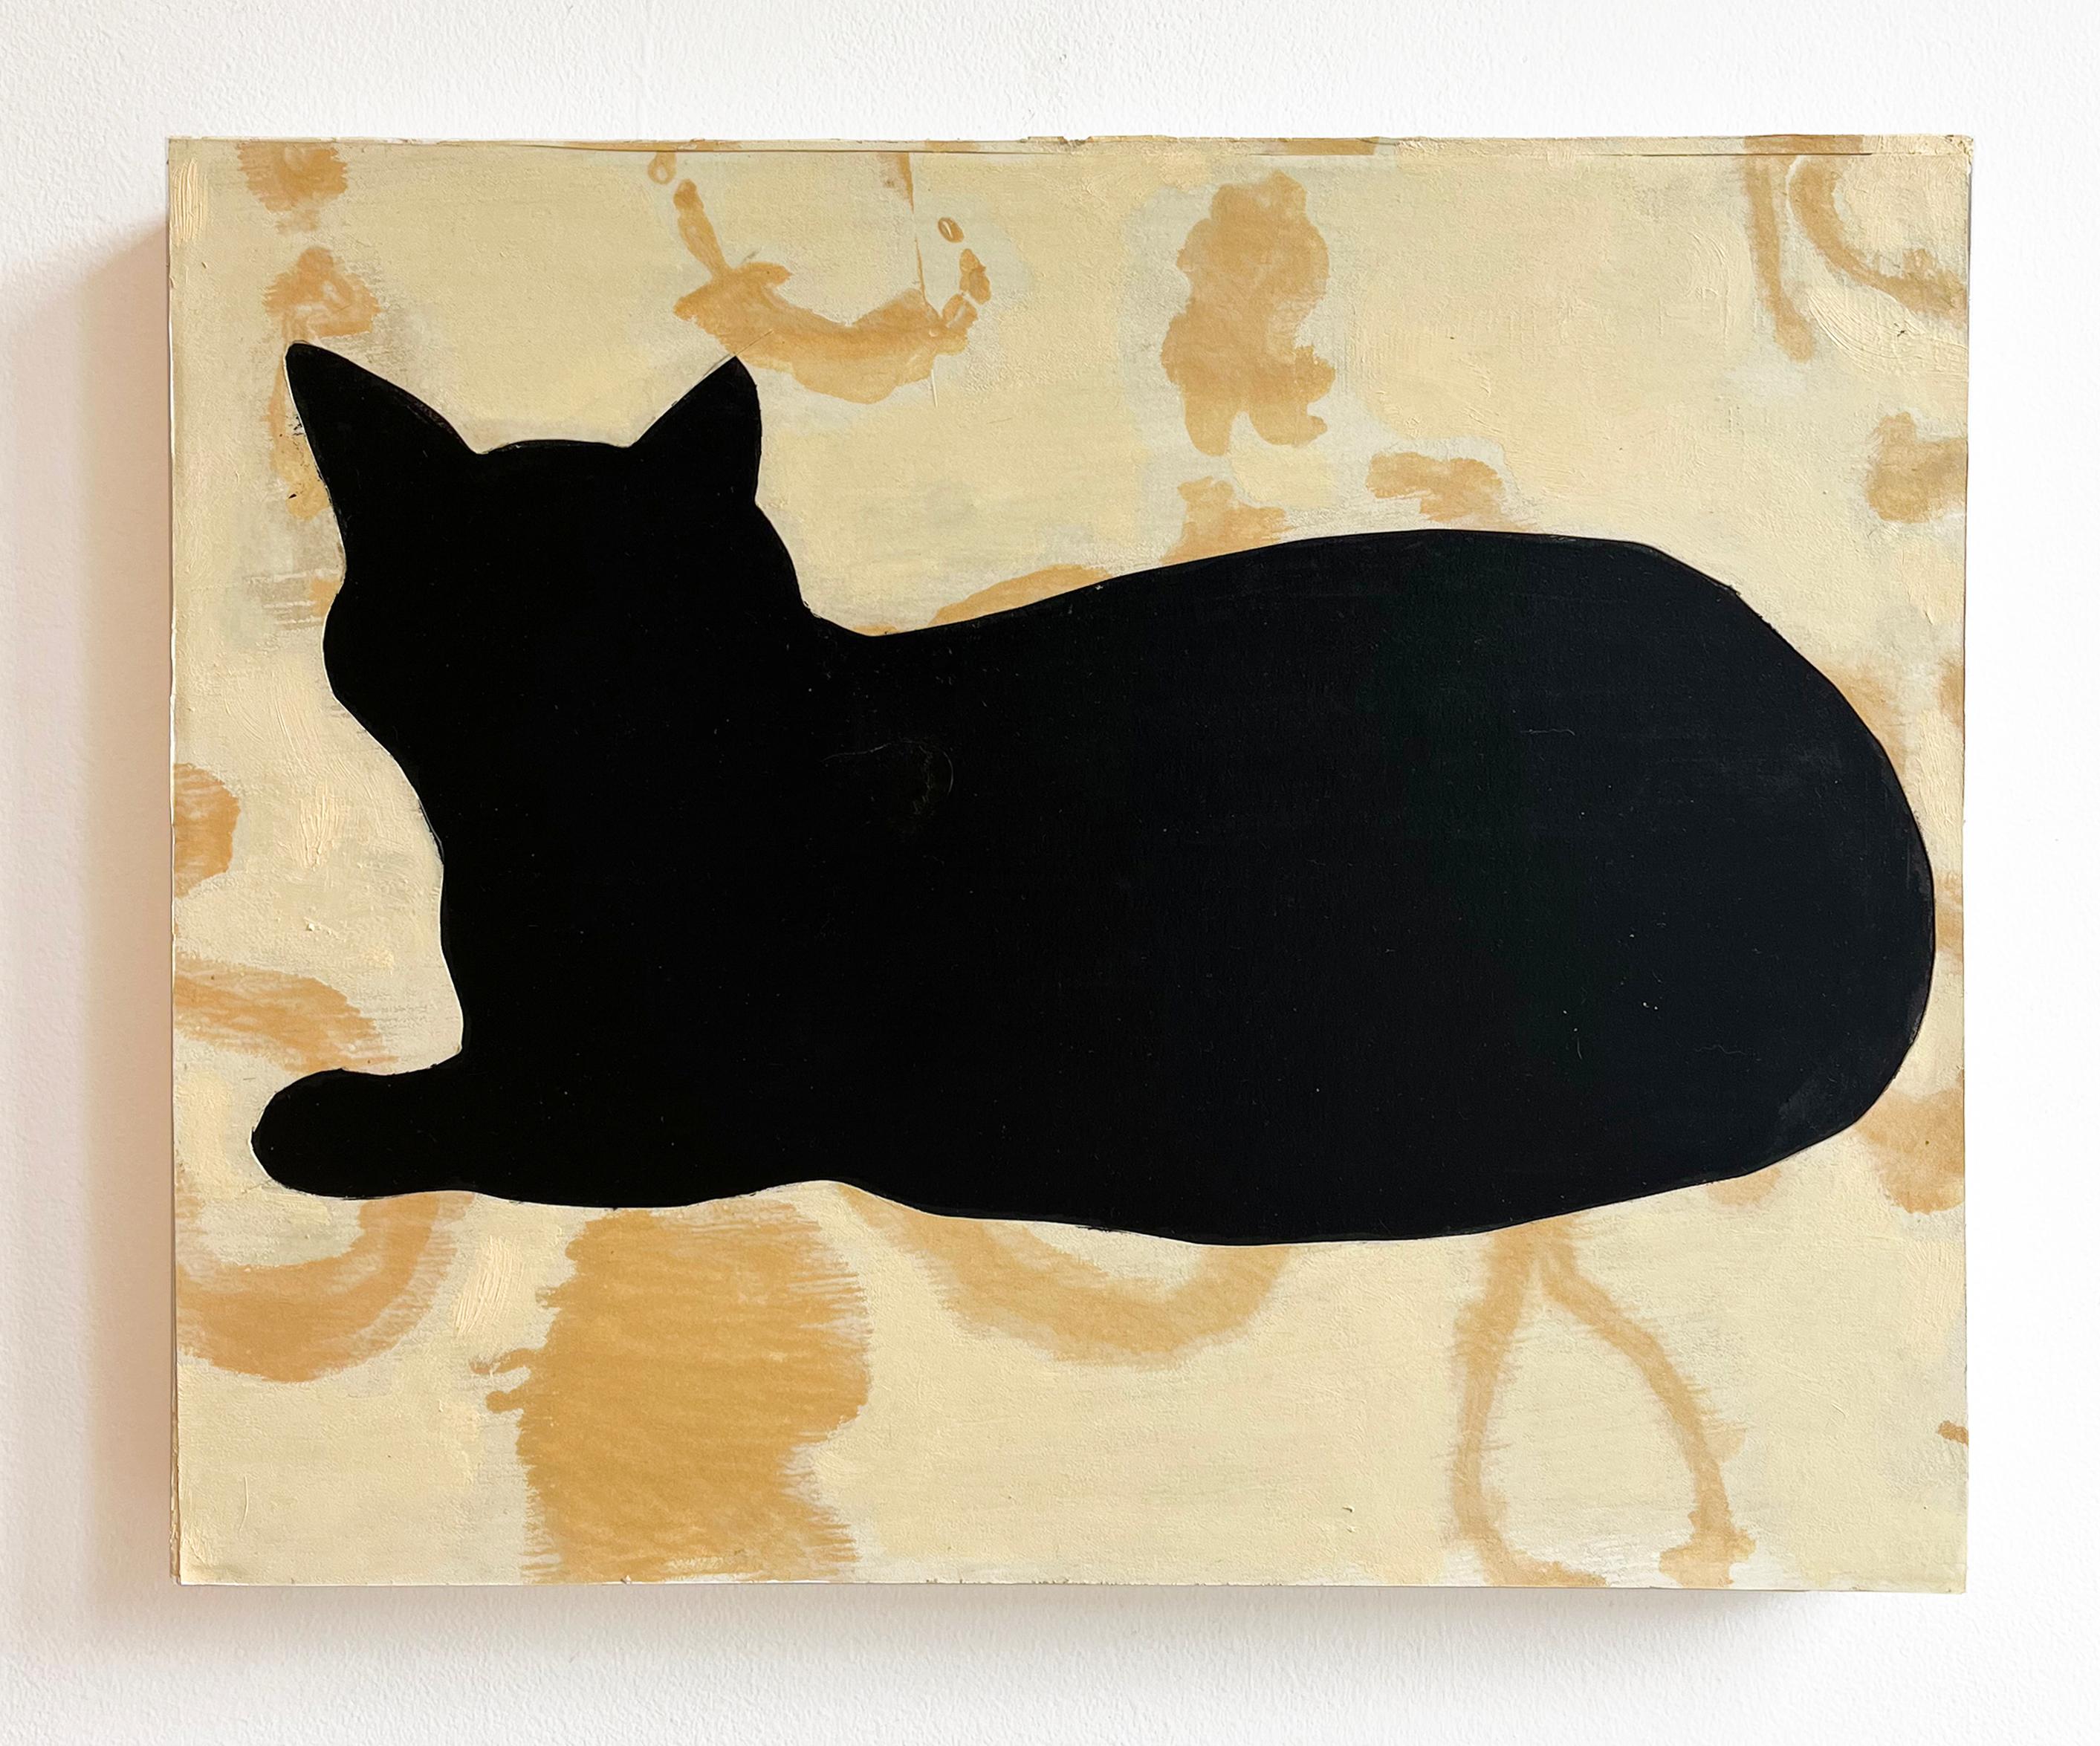 Collaged monotype still-life silhouette of a cat.
David Konigsberg
Black Cat, 2023
15